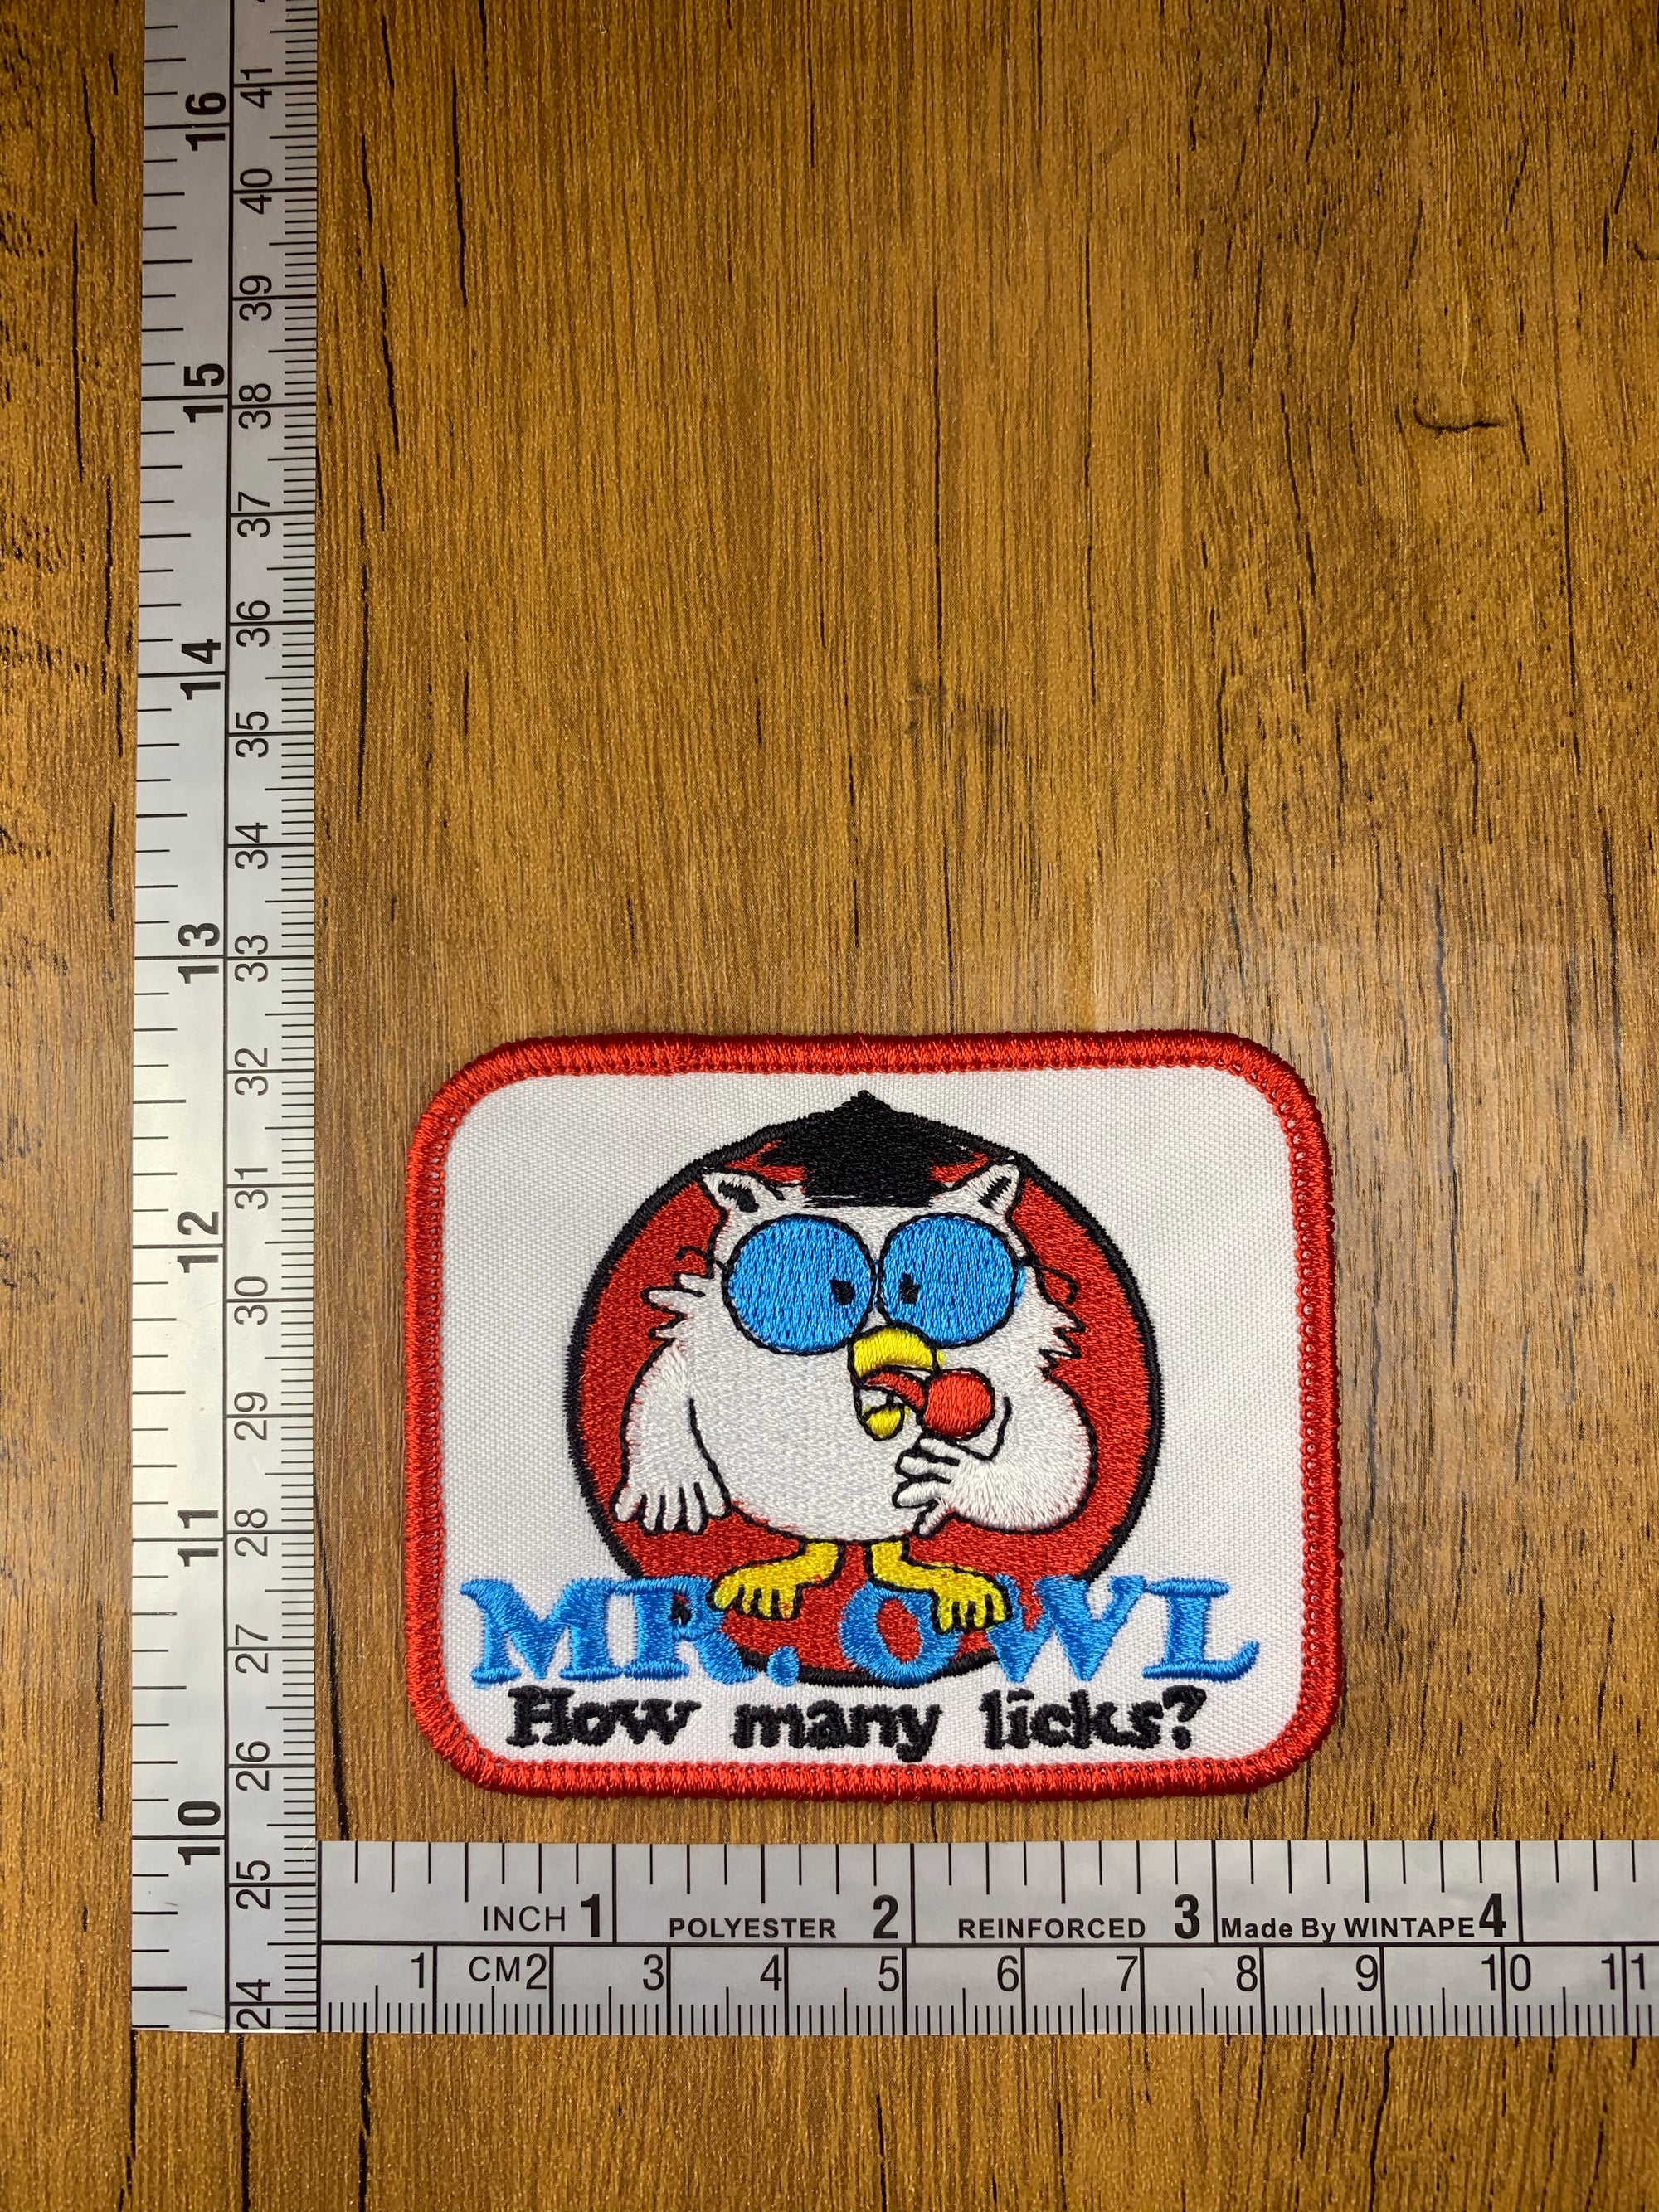 Mr. Owl, How Many Licks? Lollipop, Tootsie Pop, Candy